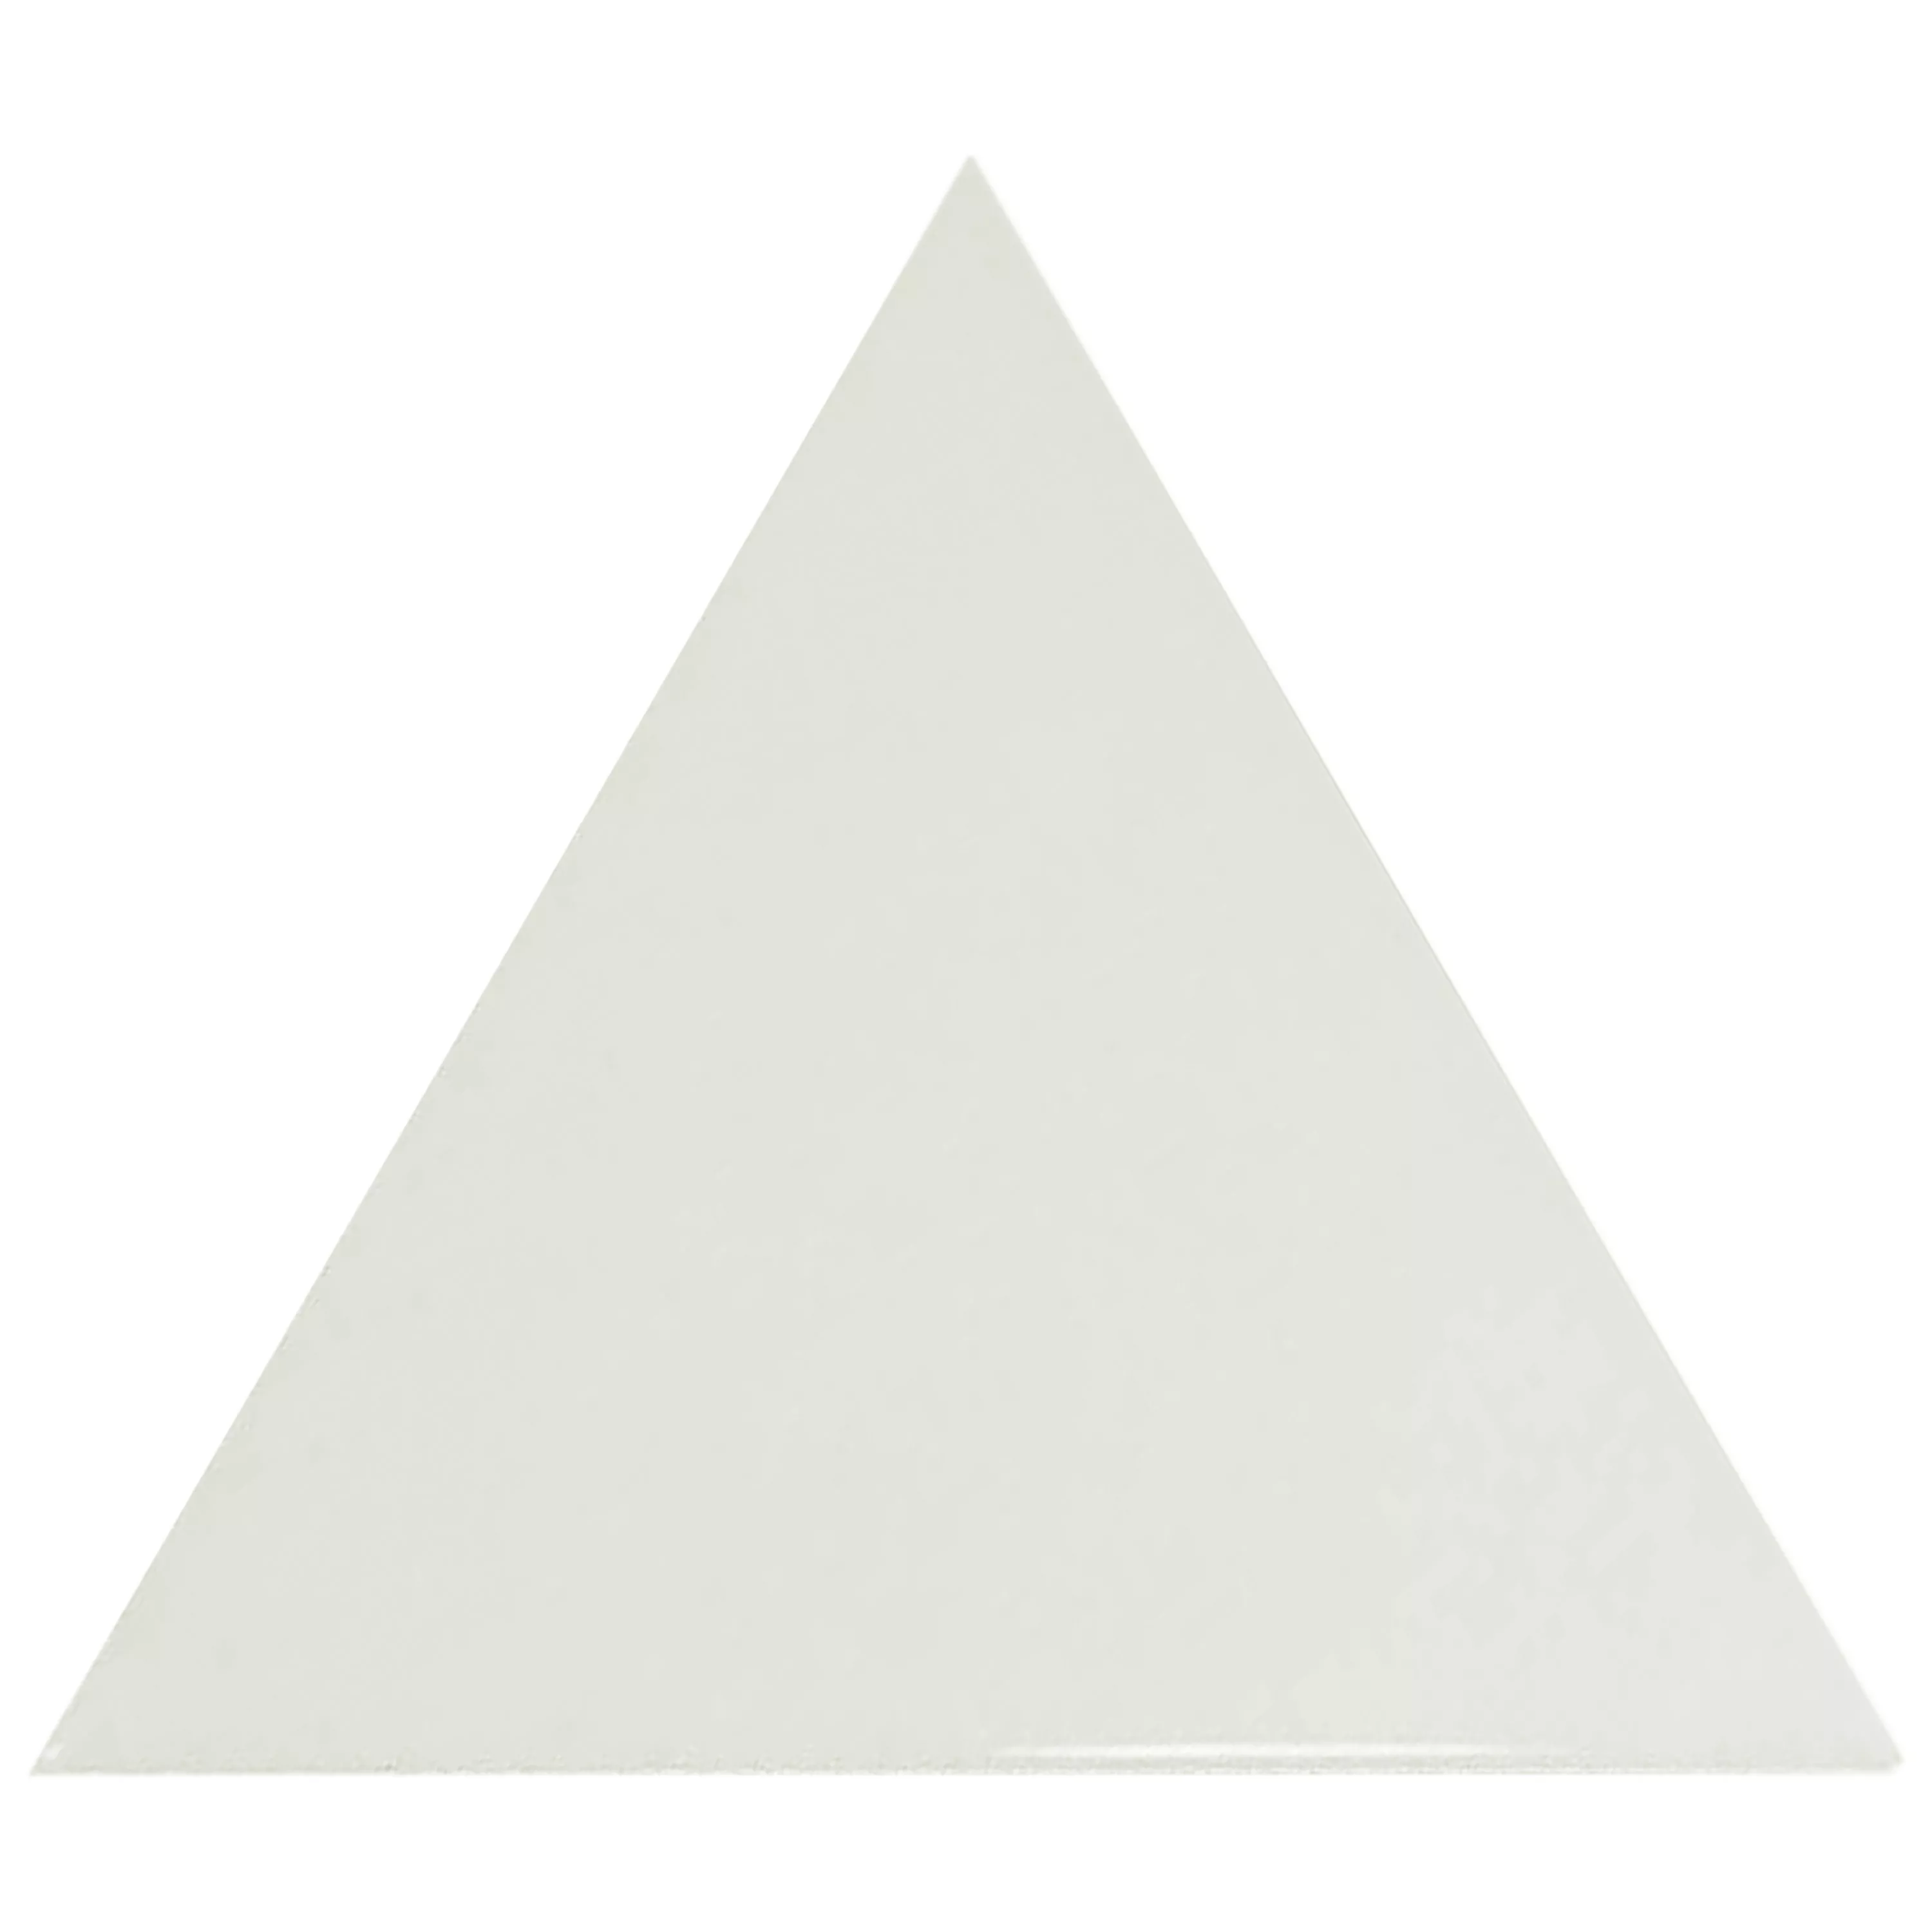 Échantillon Carrelage Mural Britannia Triangle 10,8x12,4cm Menthe